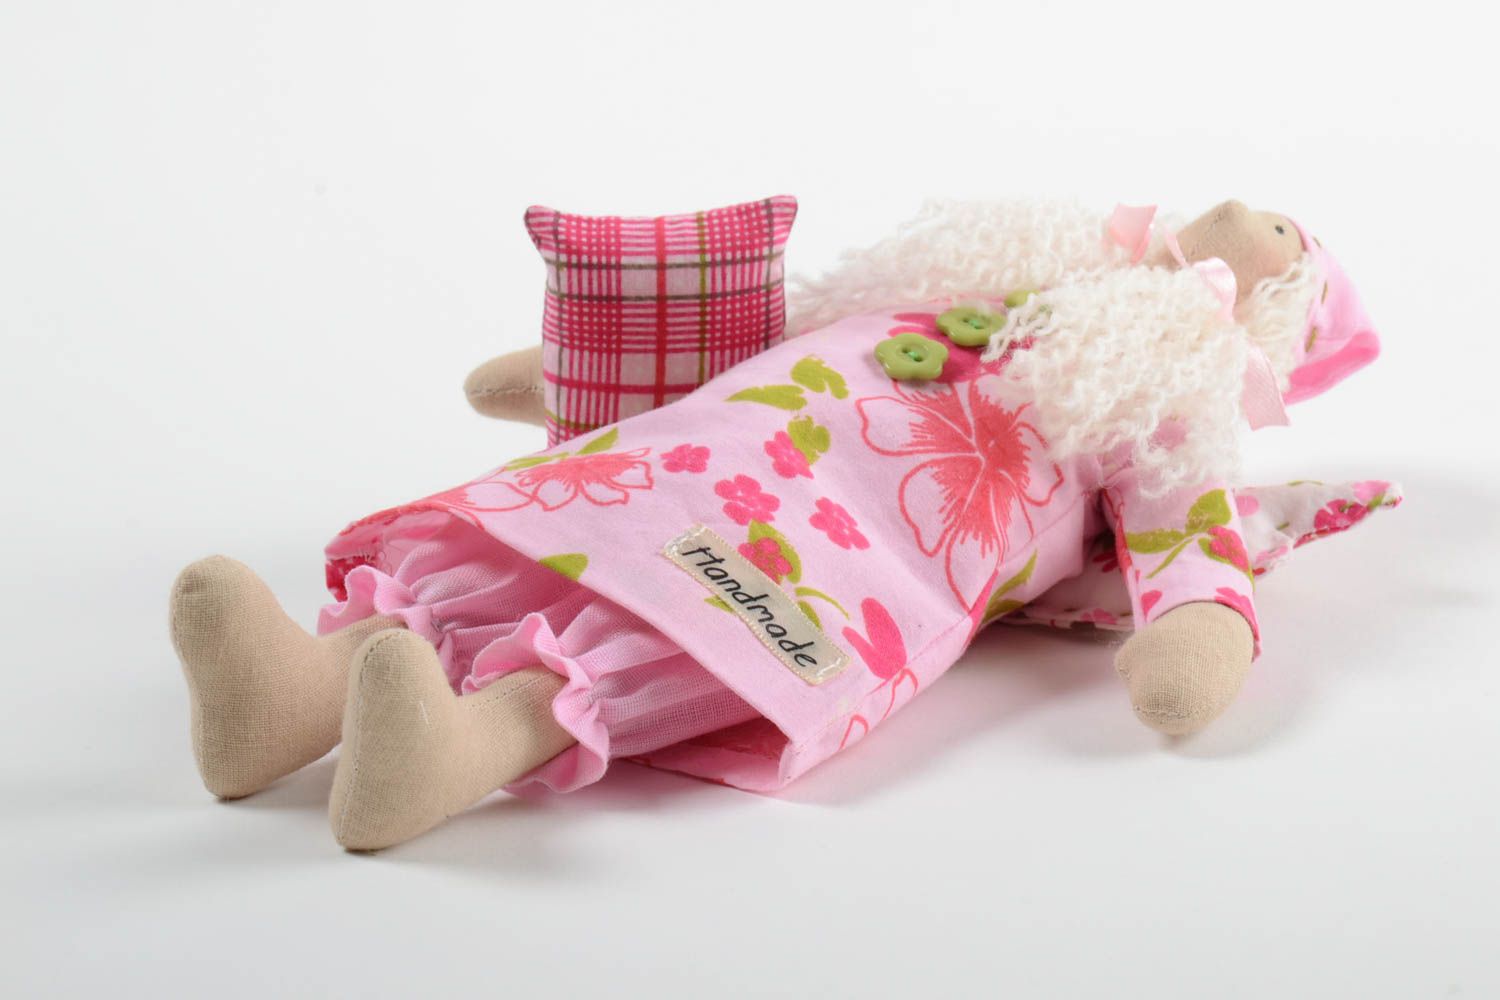 Beautiful handmade interior doll fabric soft toy rag doll designs gift ideas photo 5